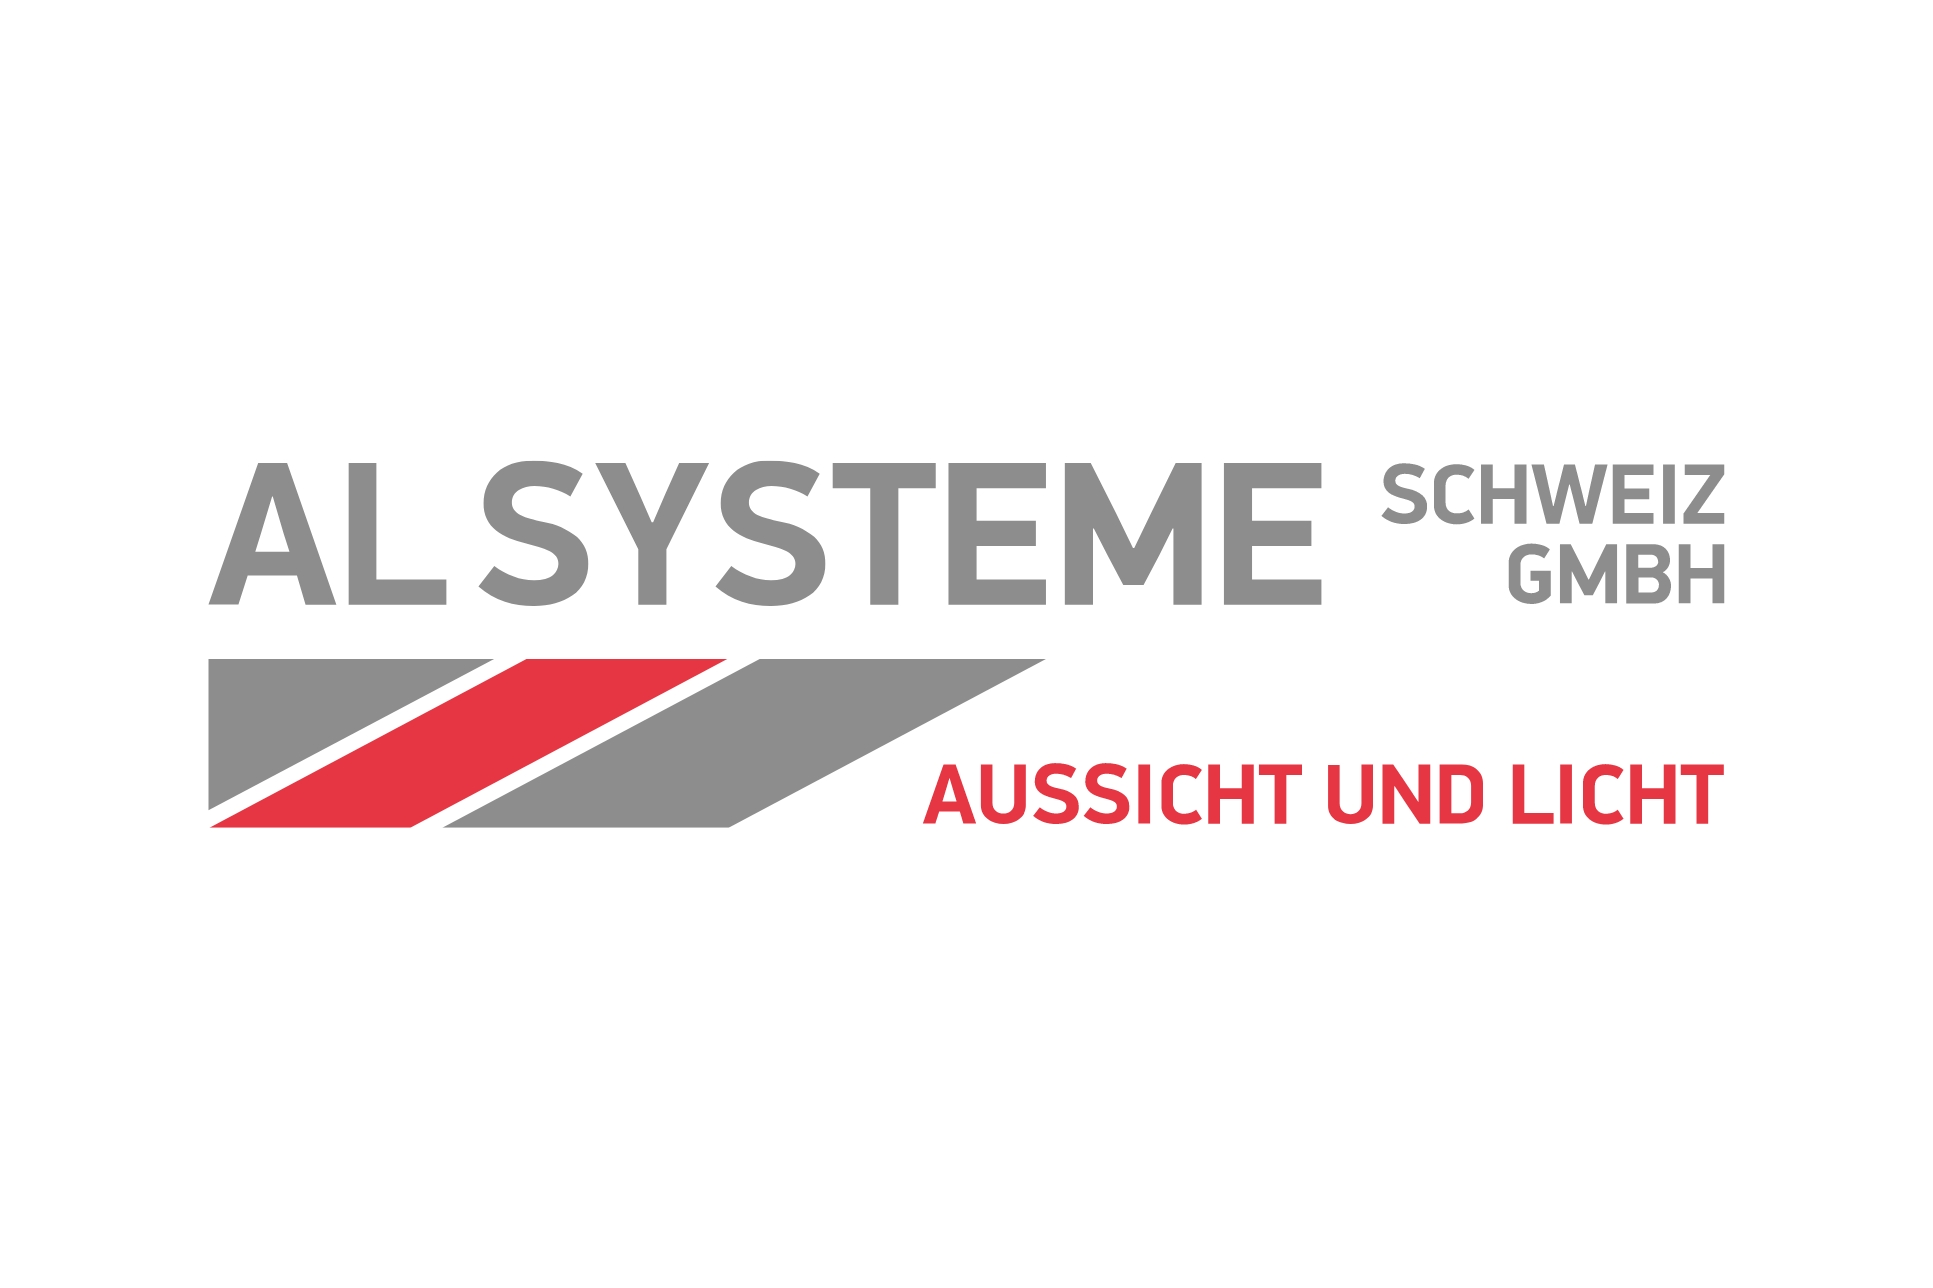 AL Systeme SCHWEIZ GmbH